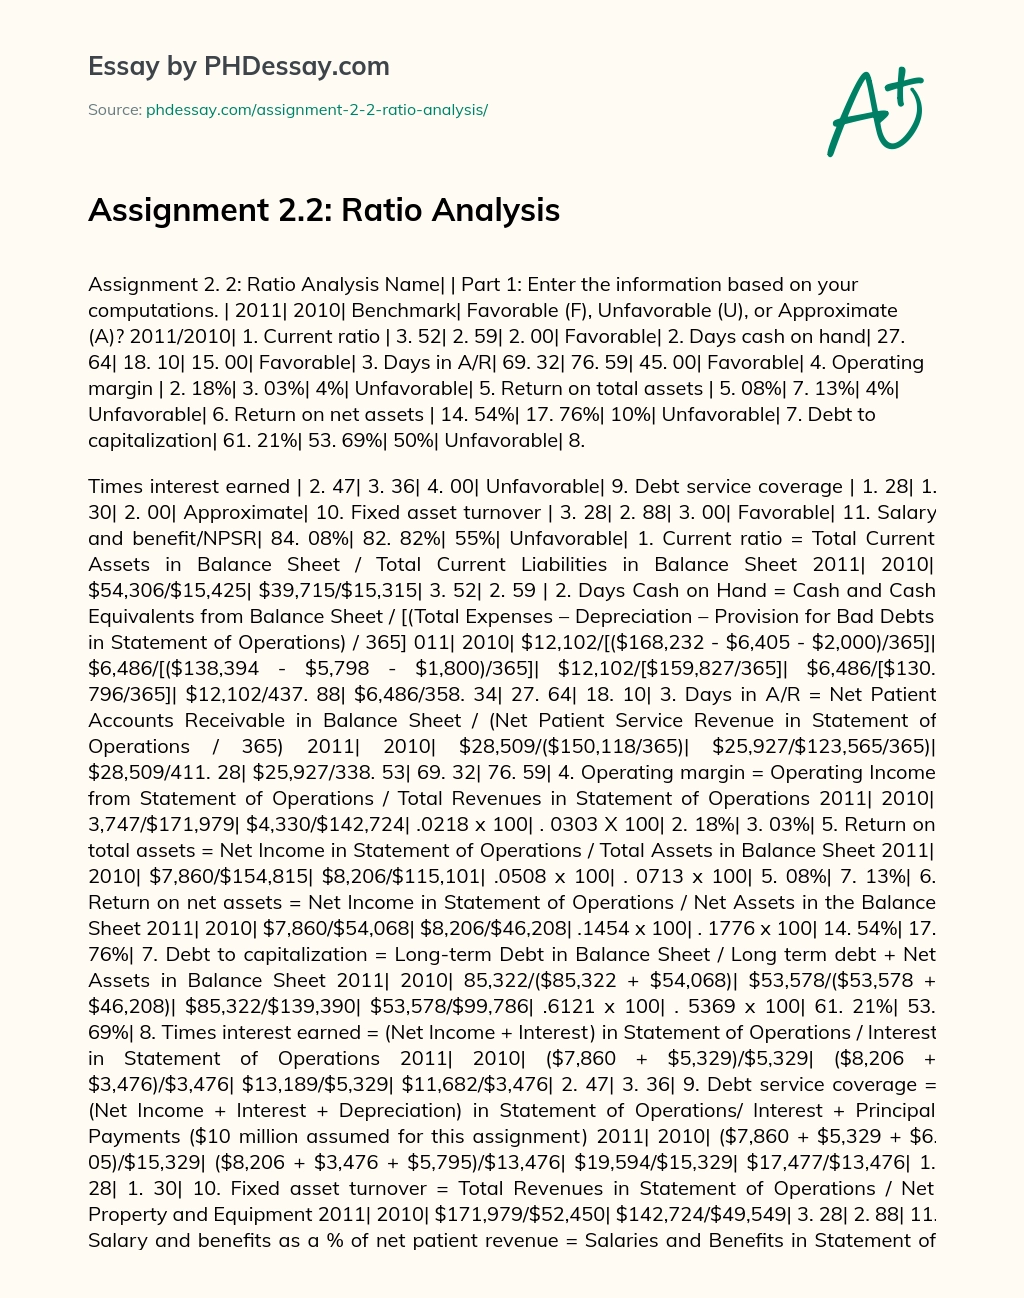 Assignment 2.2: Ratio Analysis essay